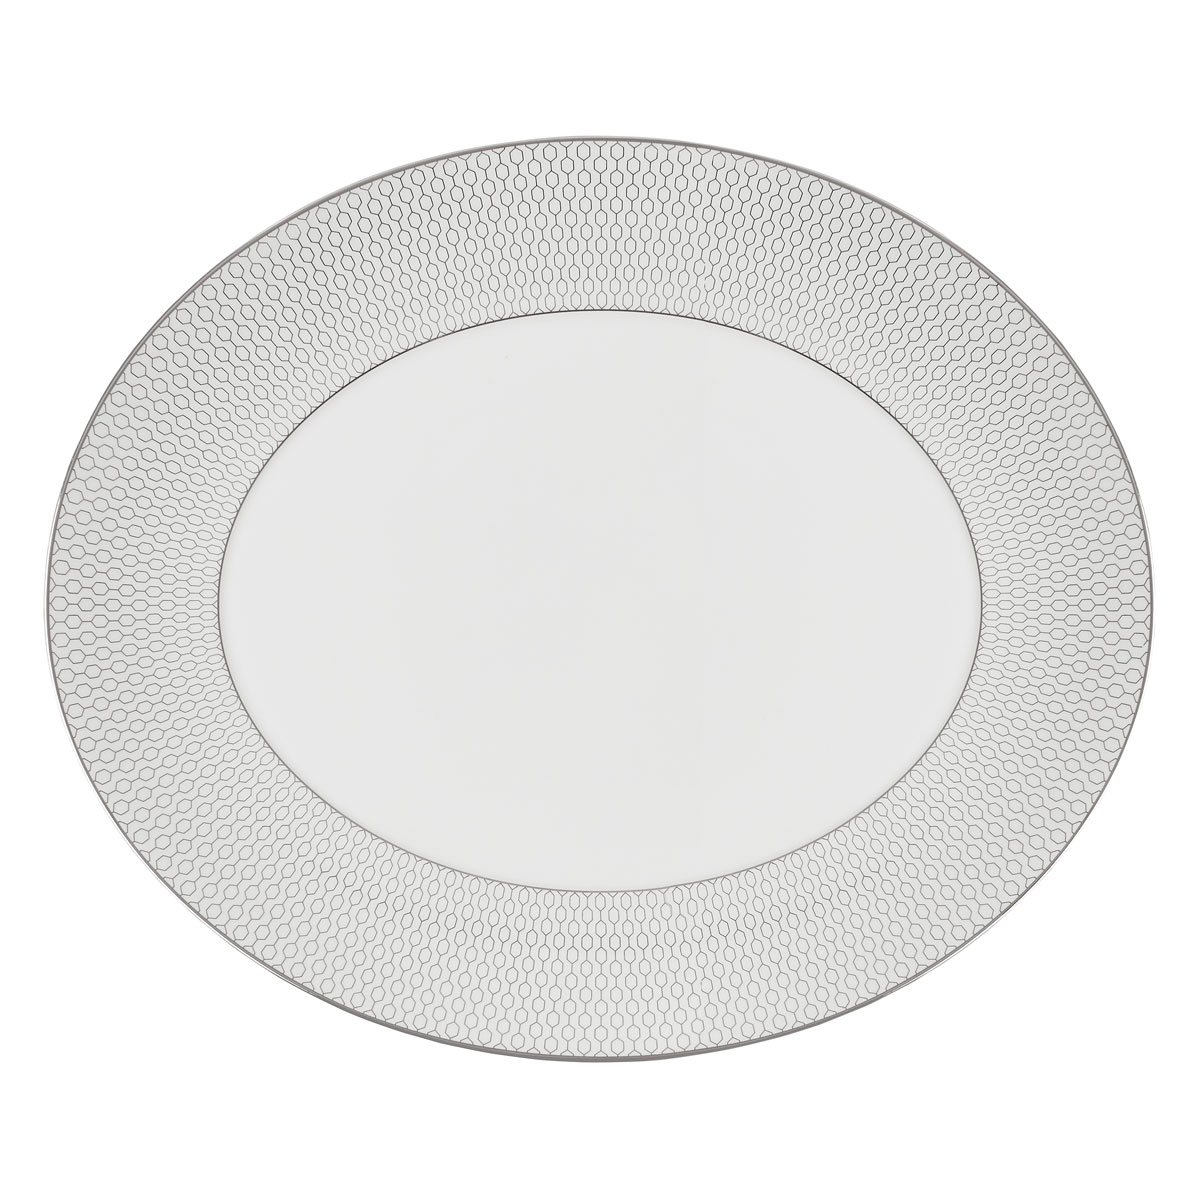 Wedgwood Gio Platinum Oval Serving Platter 13"